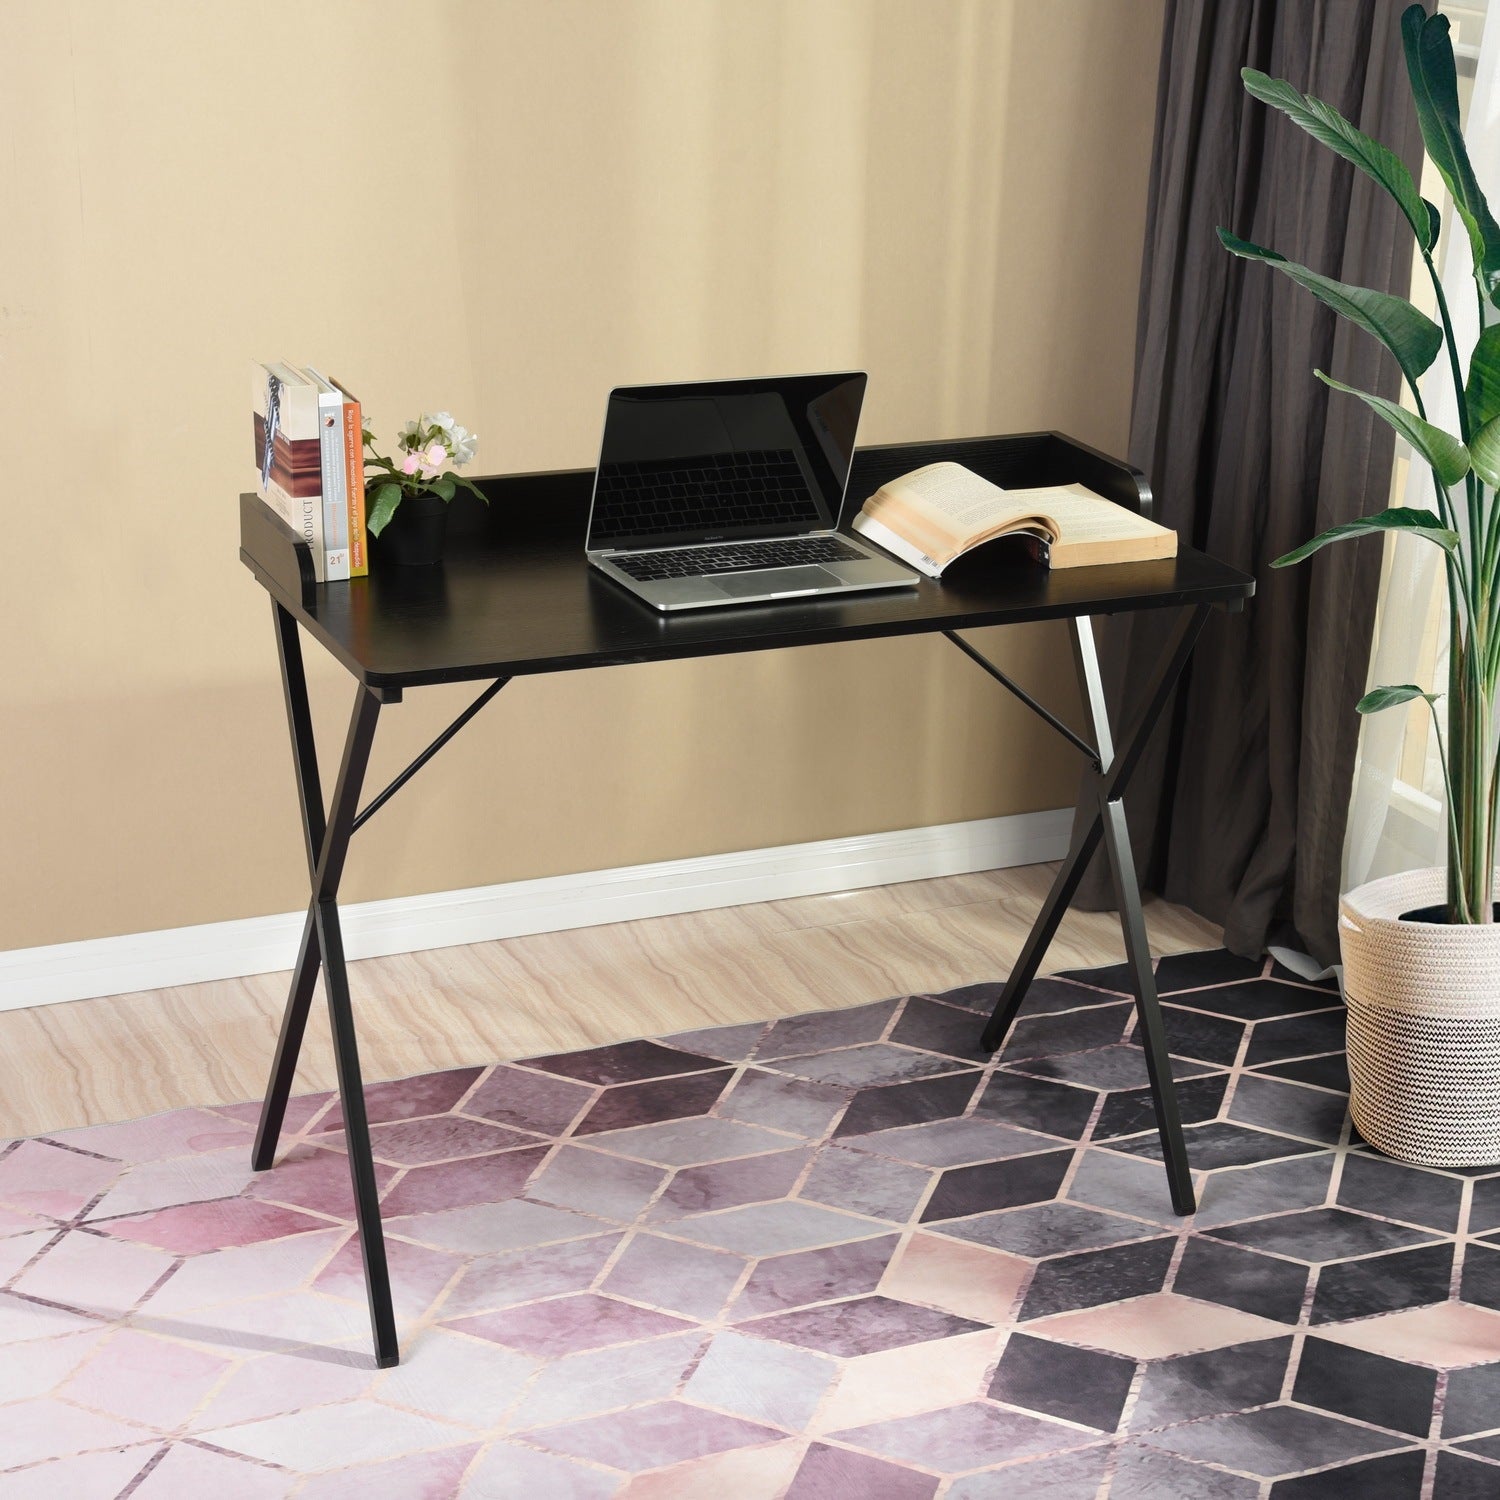 39.4"L Rectangular Computer Desk, Writing Desk full black-office-poplar-rectangular-mdf-metal & wood